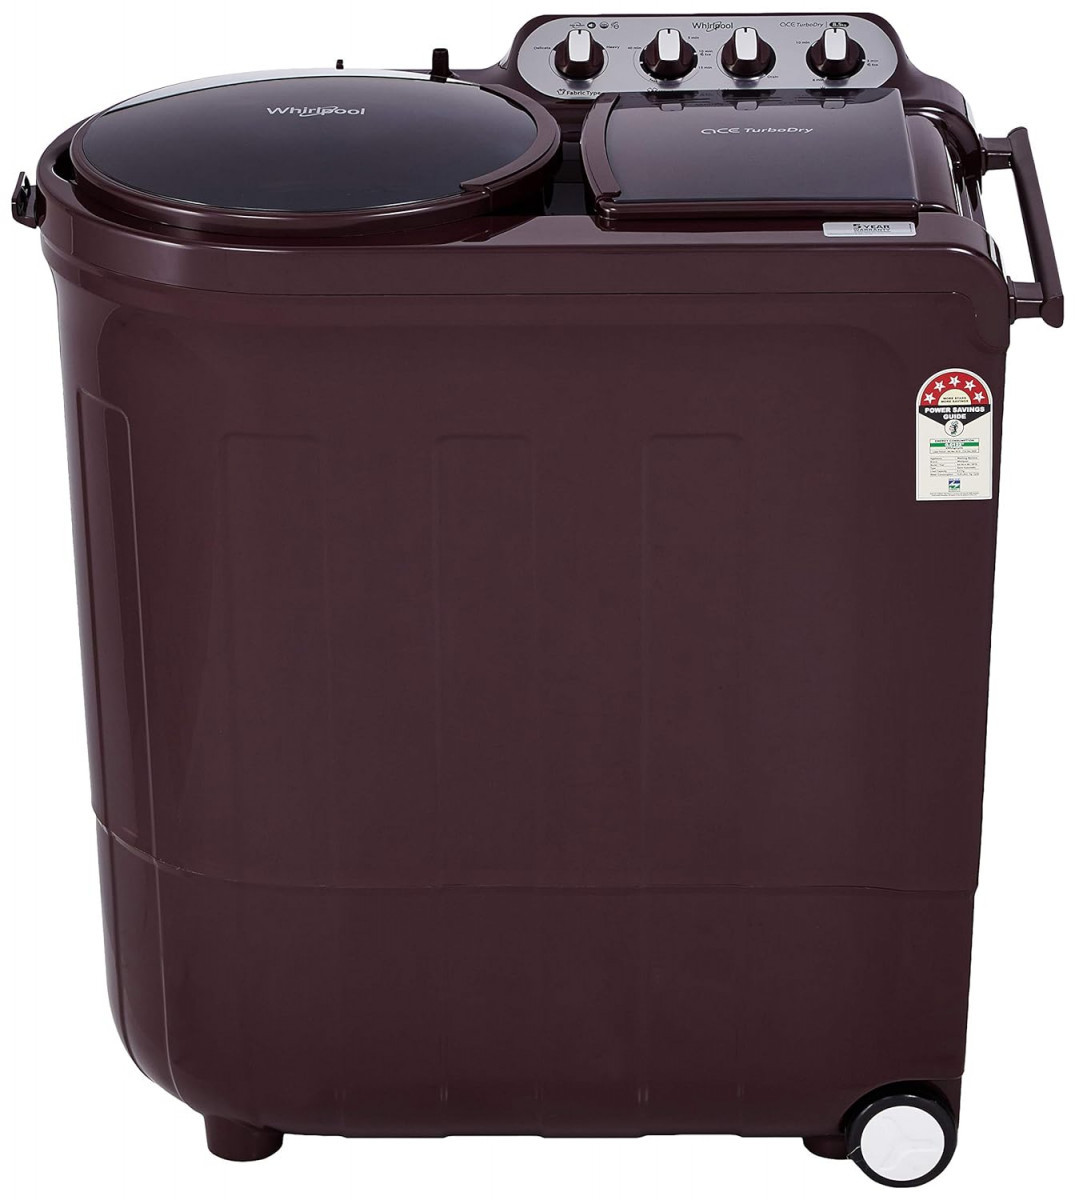 Whirlpool 85 Kg 5 Star Semi-Automatic Top Loading Washing Machine ACE 85 TURBO DRY Wine Dazzle